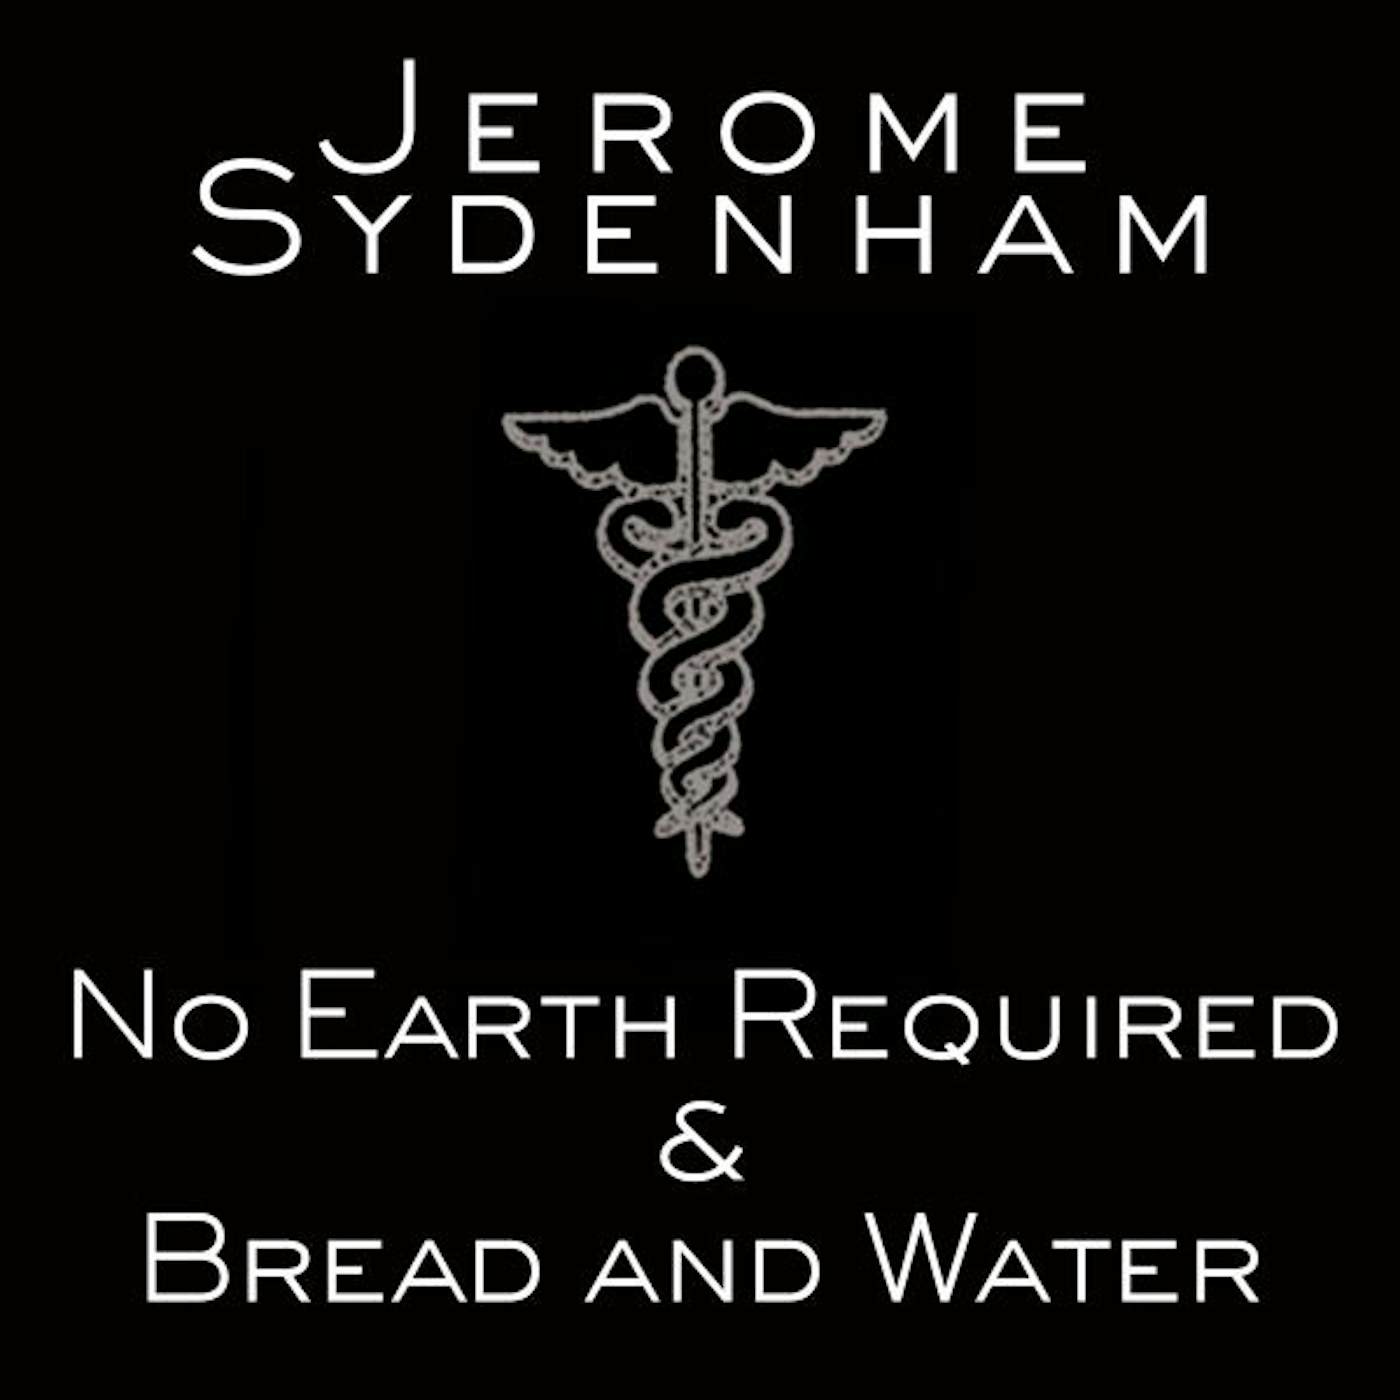 Jerome Sydenham NO EARTH REQUIRED & BREAD & WATER Vinyl Record